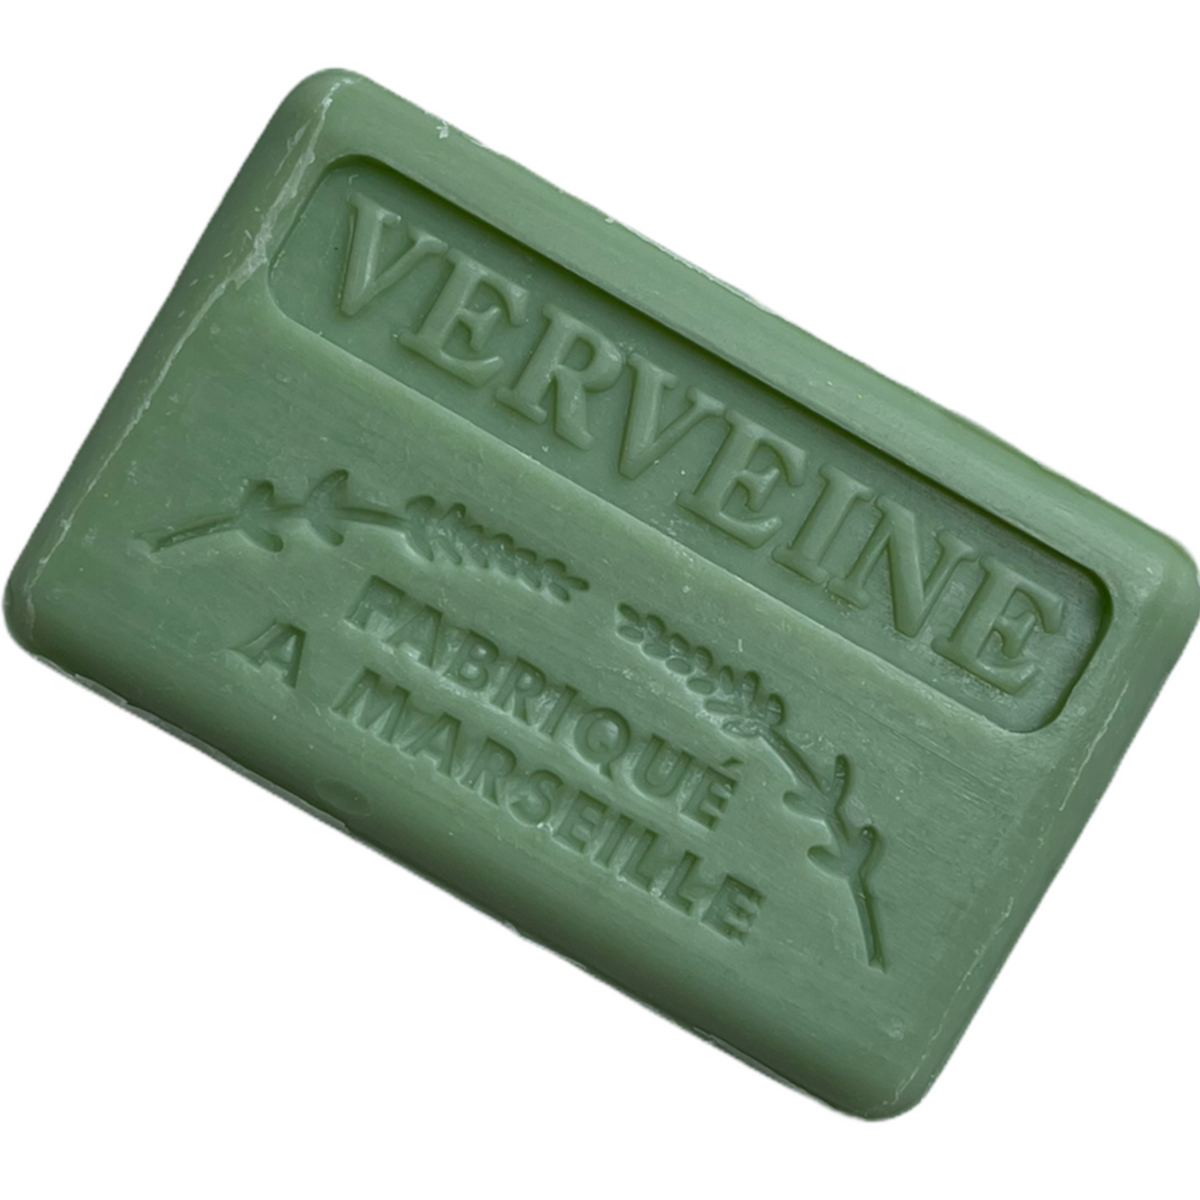 verbena french soap bar